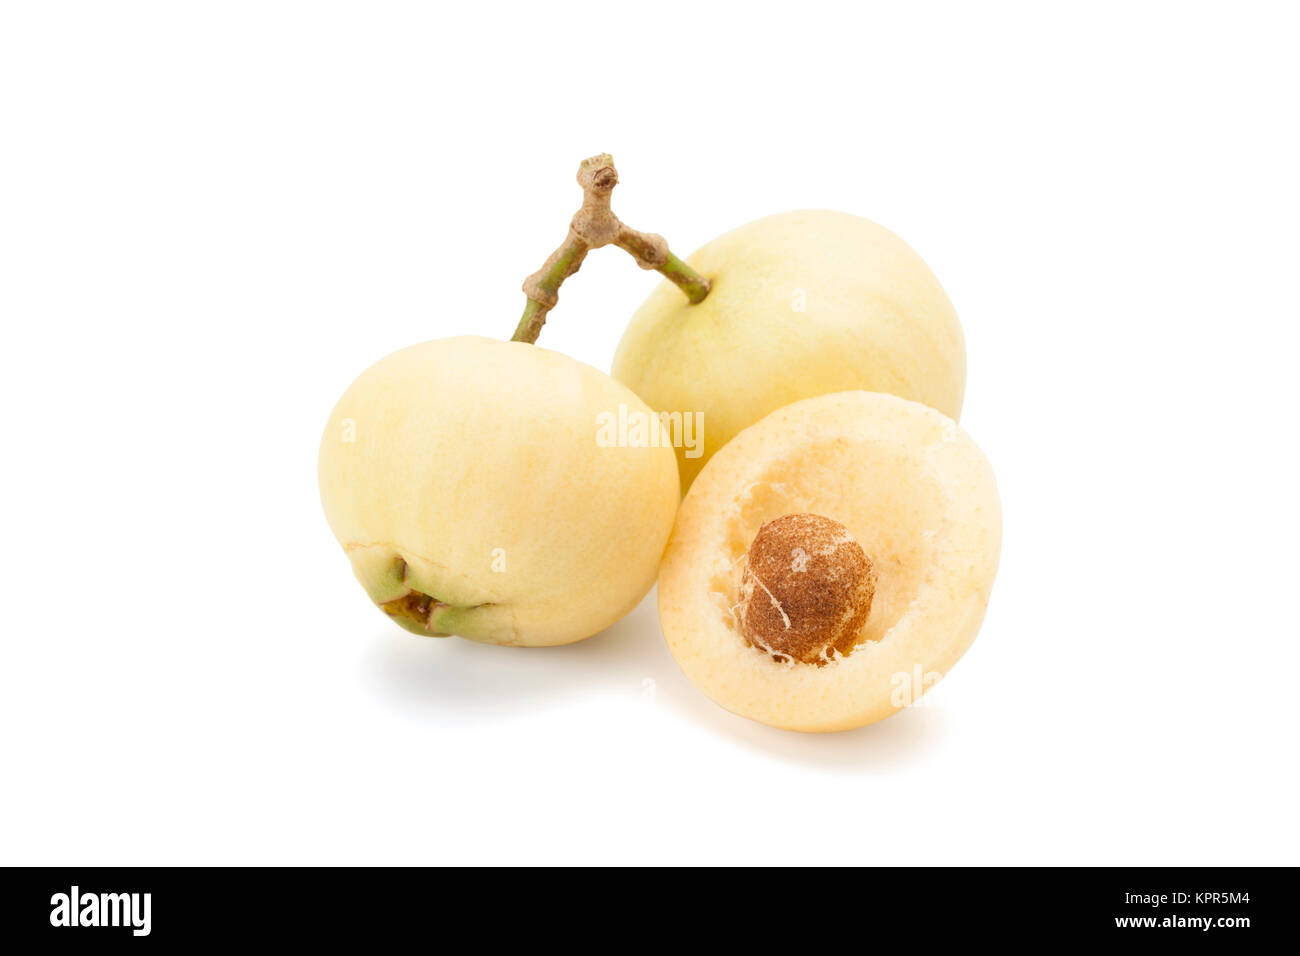 Syzygium jambos or rose apple Stock Photo